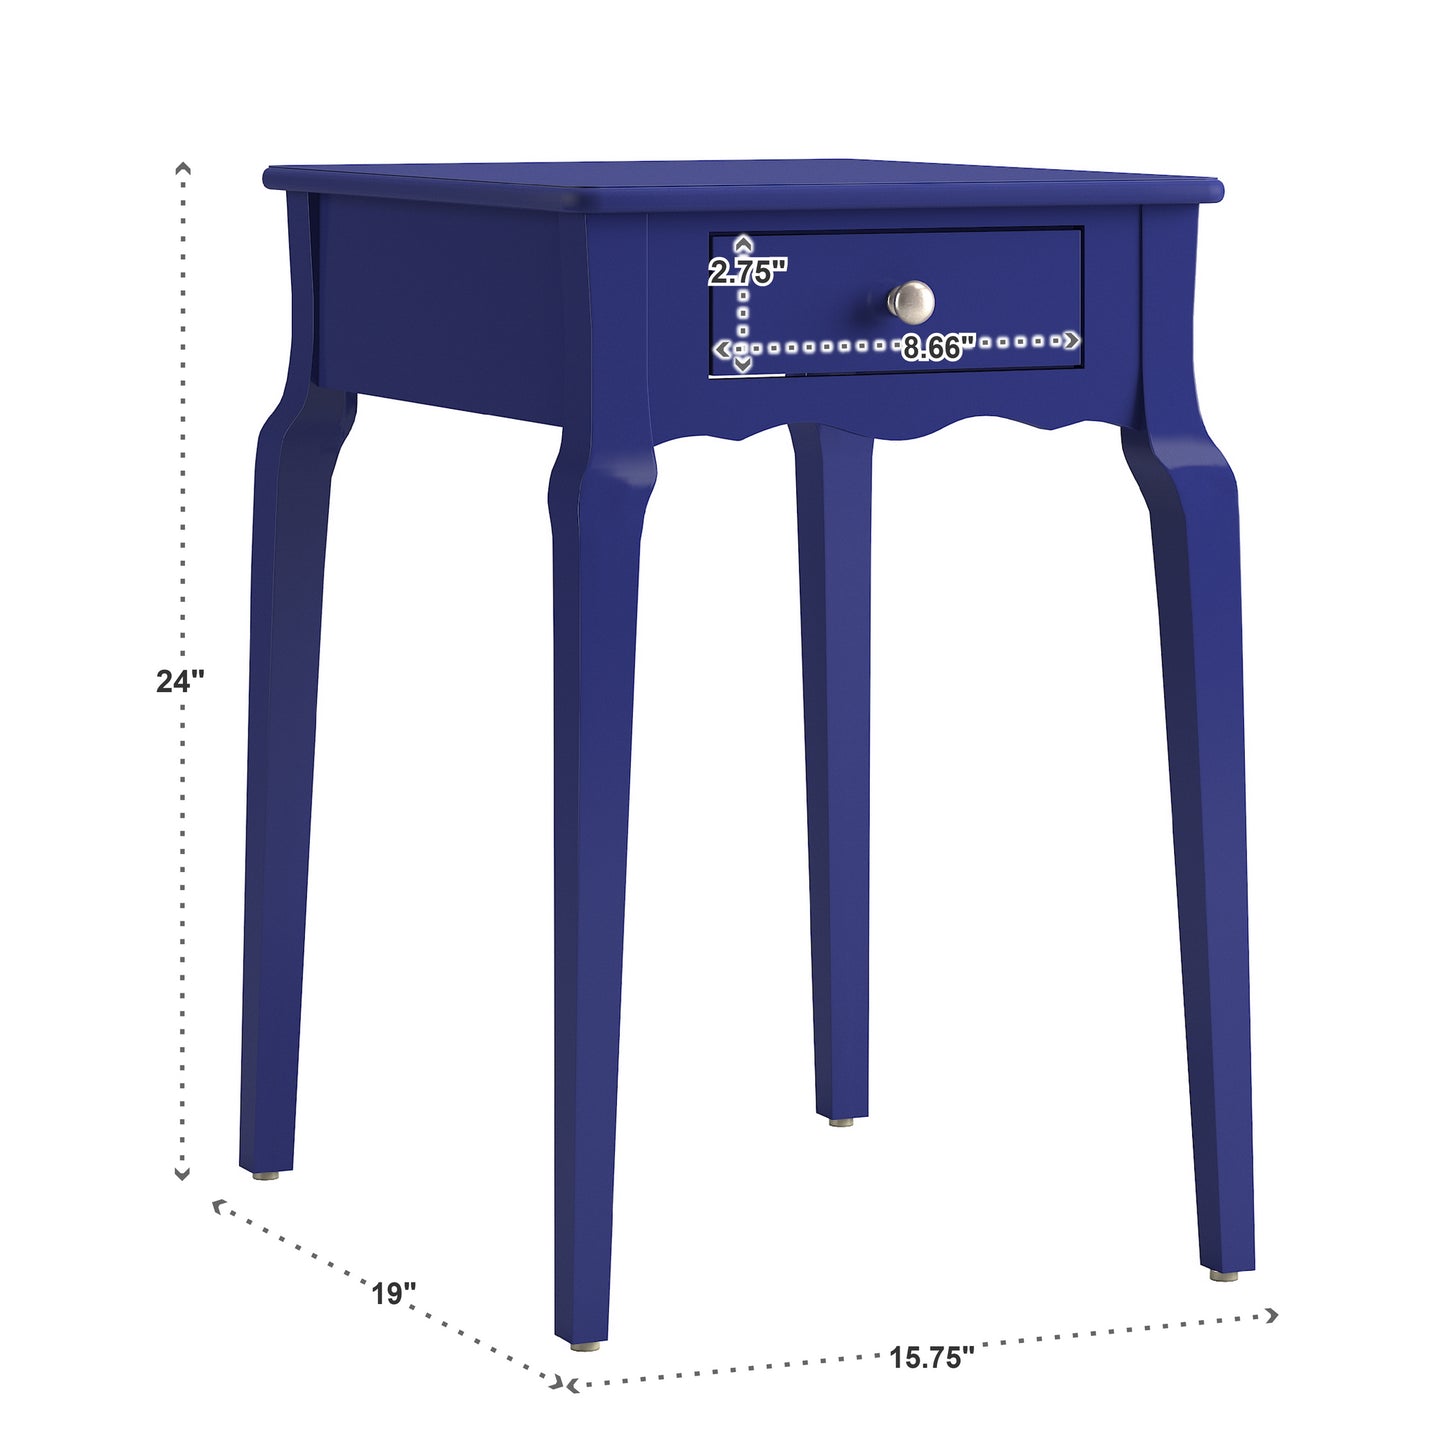 1-Drawer Wood Side Table - Twilight Blue